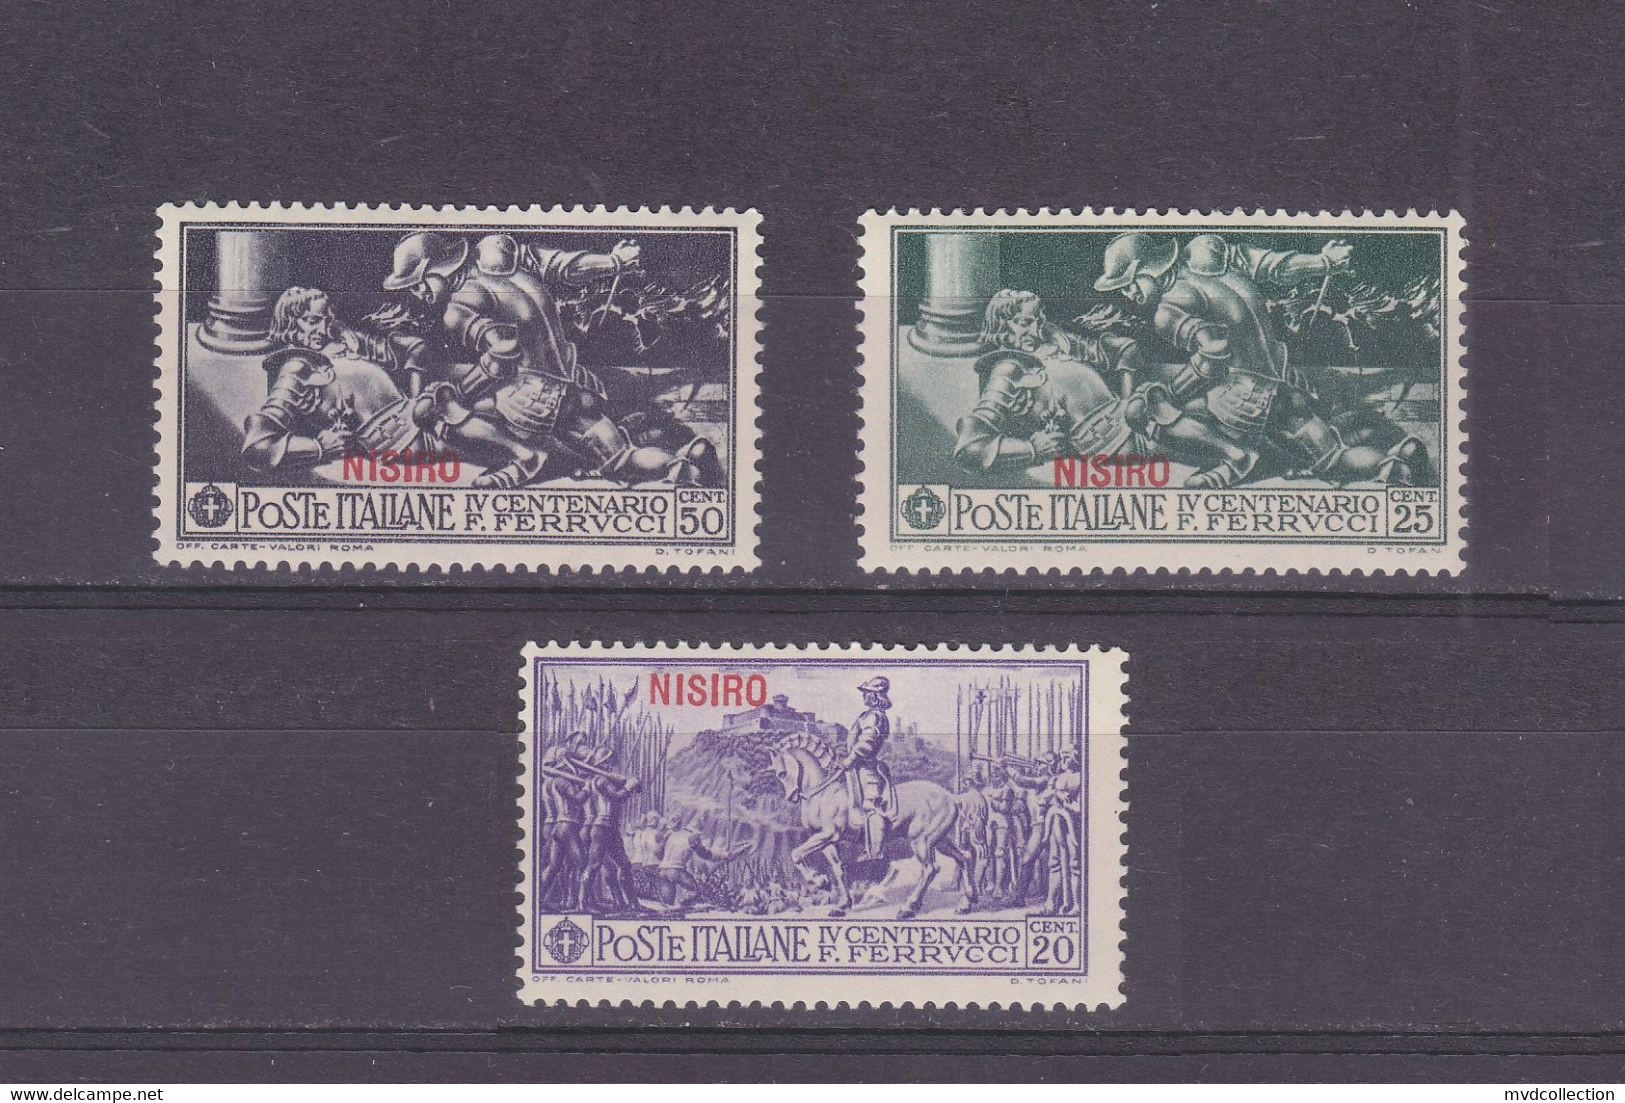 ITALY Lot CENTENARIO FERRUCCI Stamps Overprinted NISIRO 1930 VF MH Original Gum - Aegean (Nisiro)